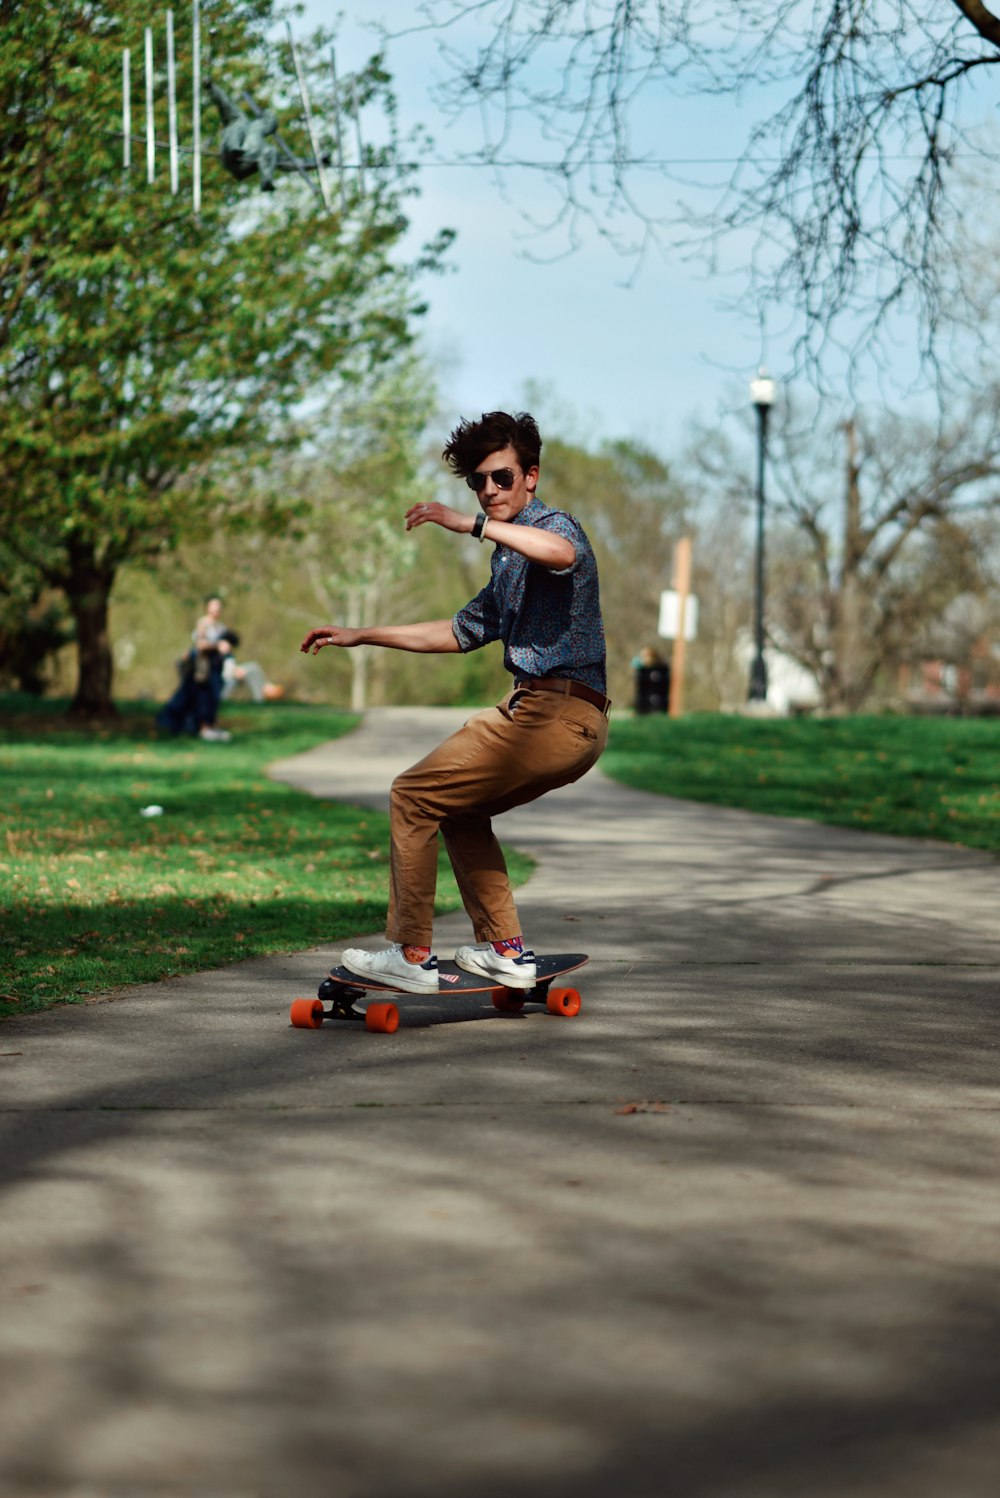 a man riding a skateboard